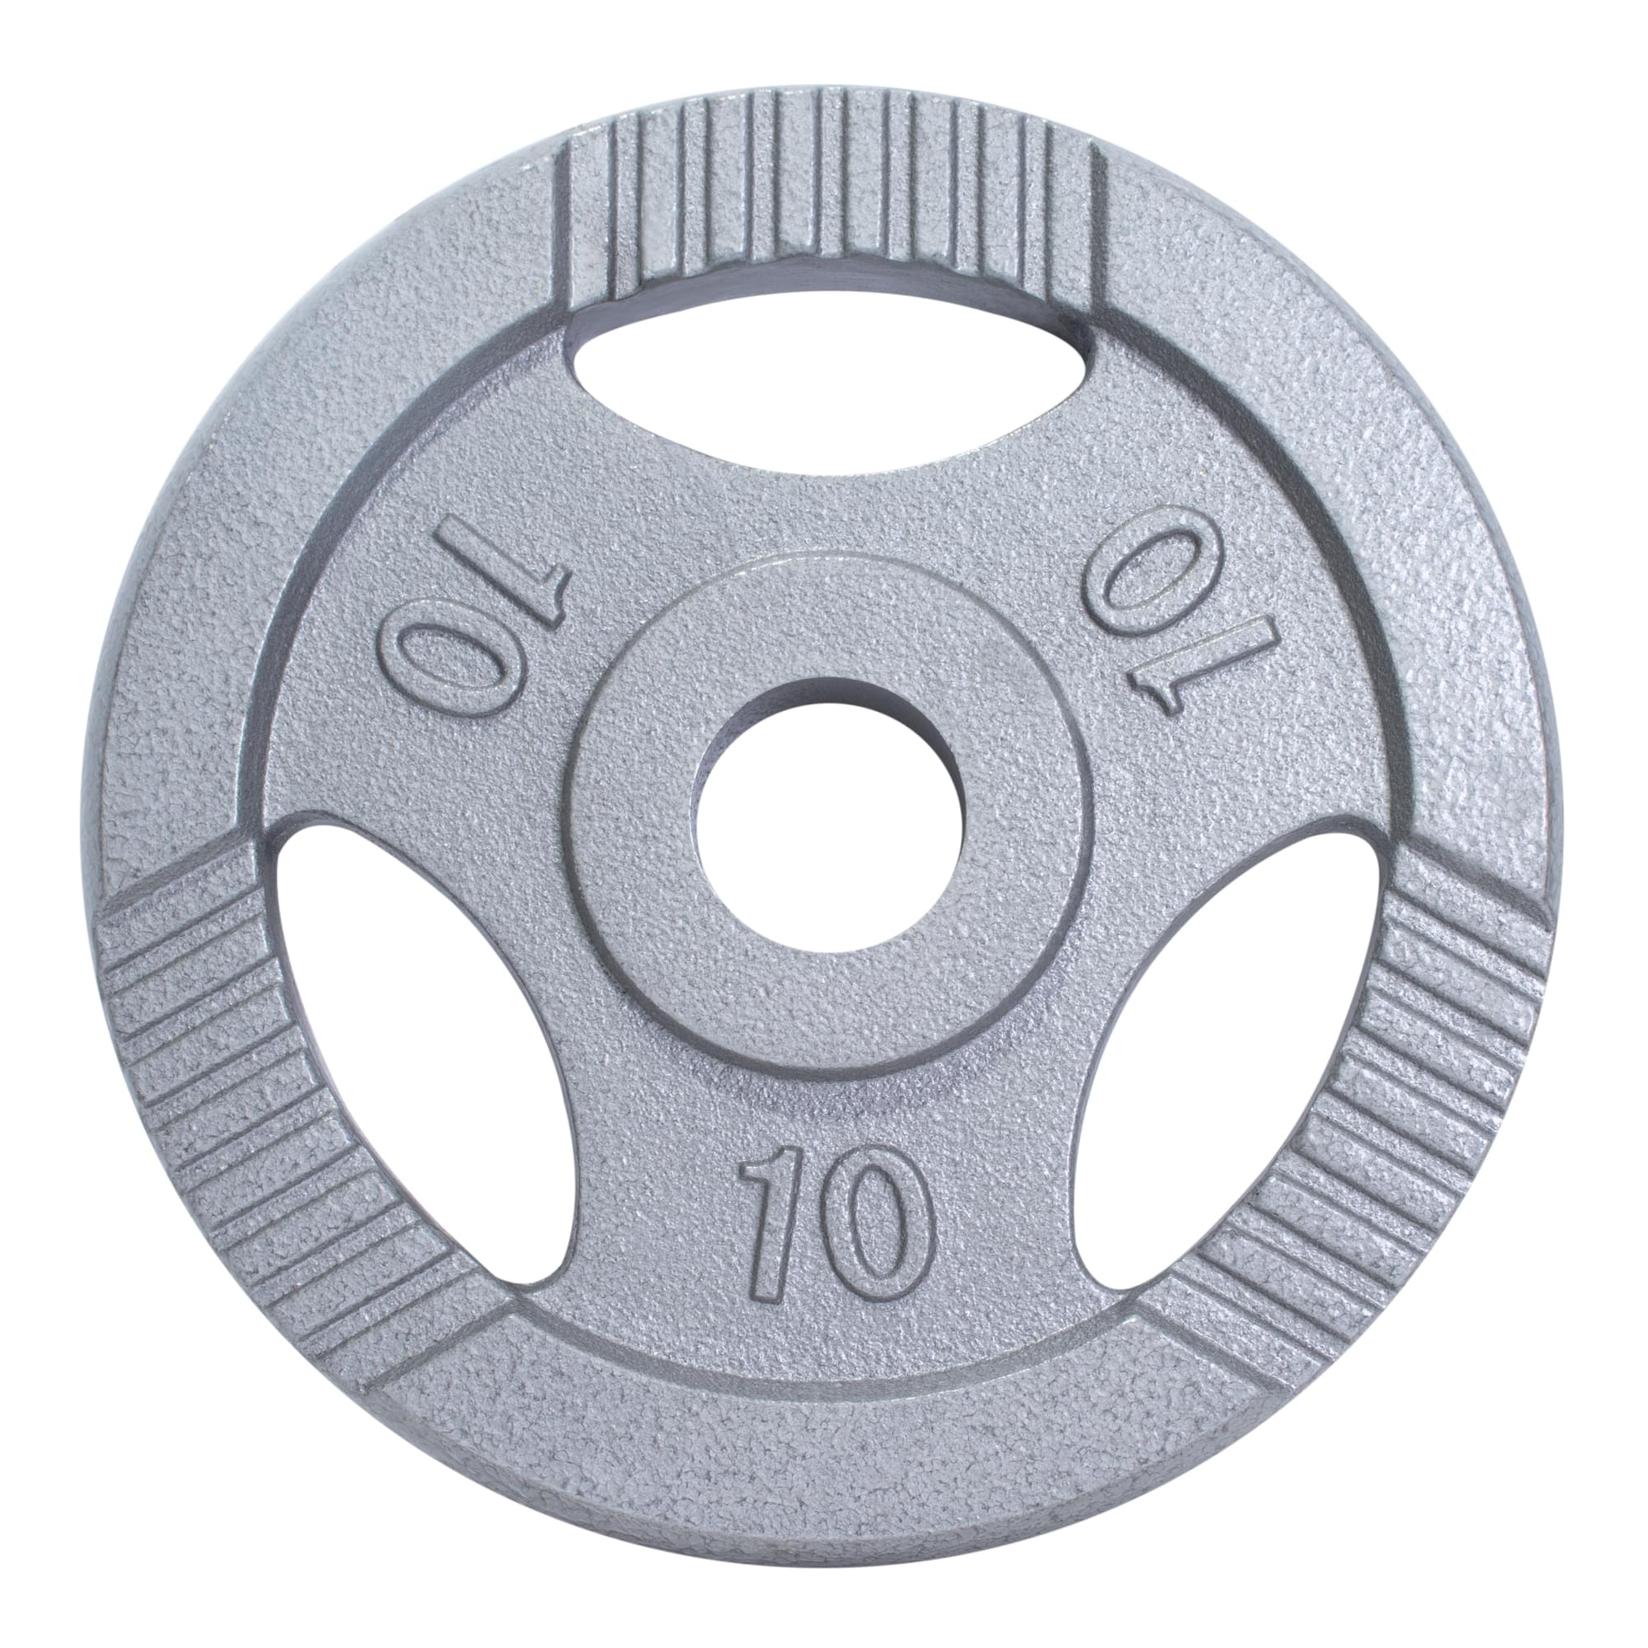 Selected image for GORILLA SPORTS Disk 10kg 50mm sivi